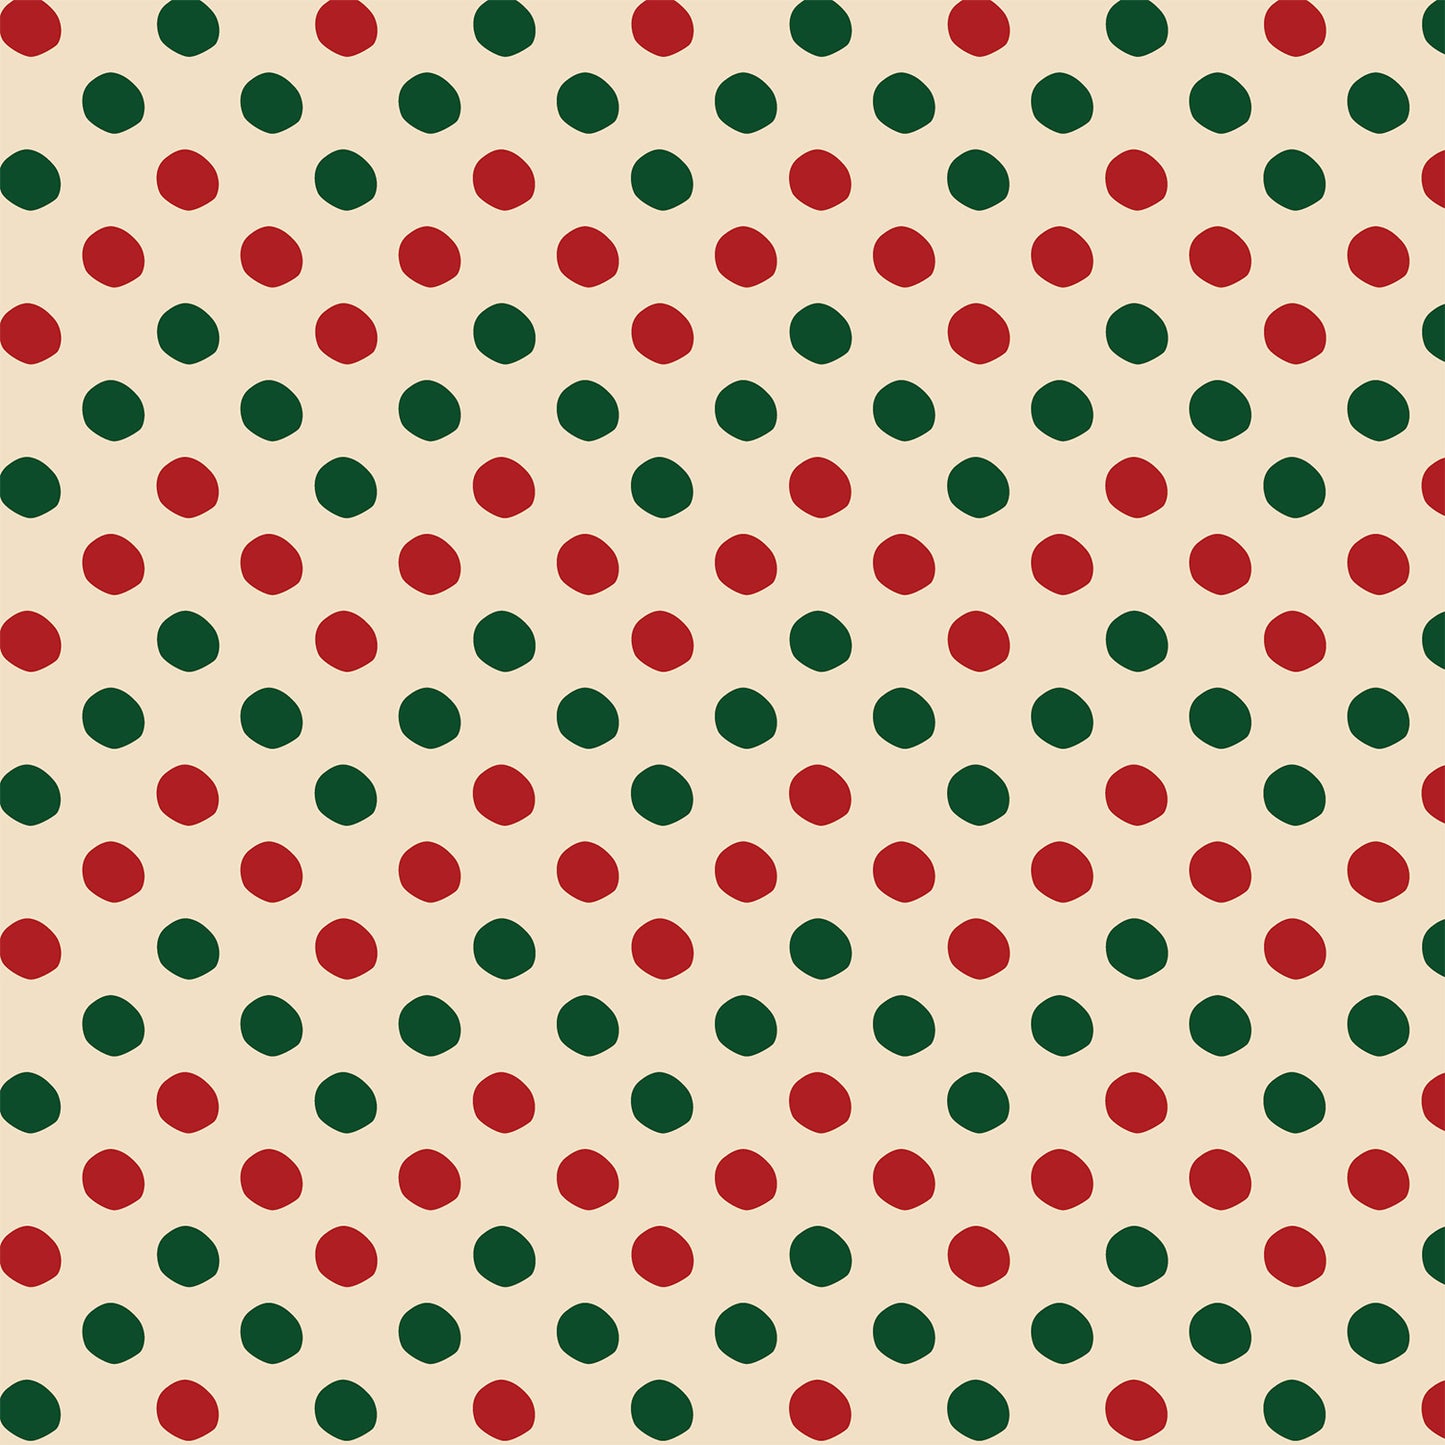 Polka Dot Red Green Flat Wrapping Paper Sheet Wholesale Wraphaholic